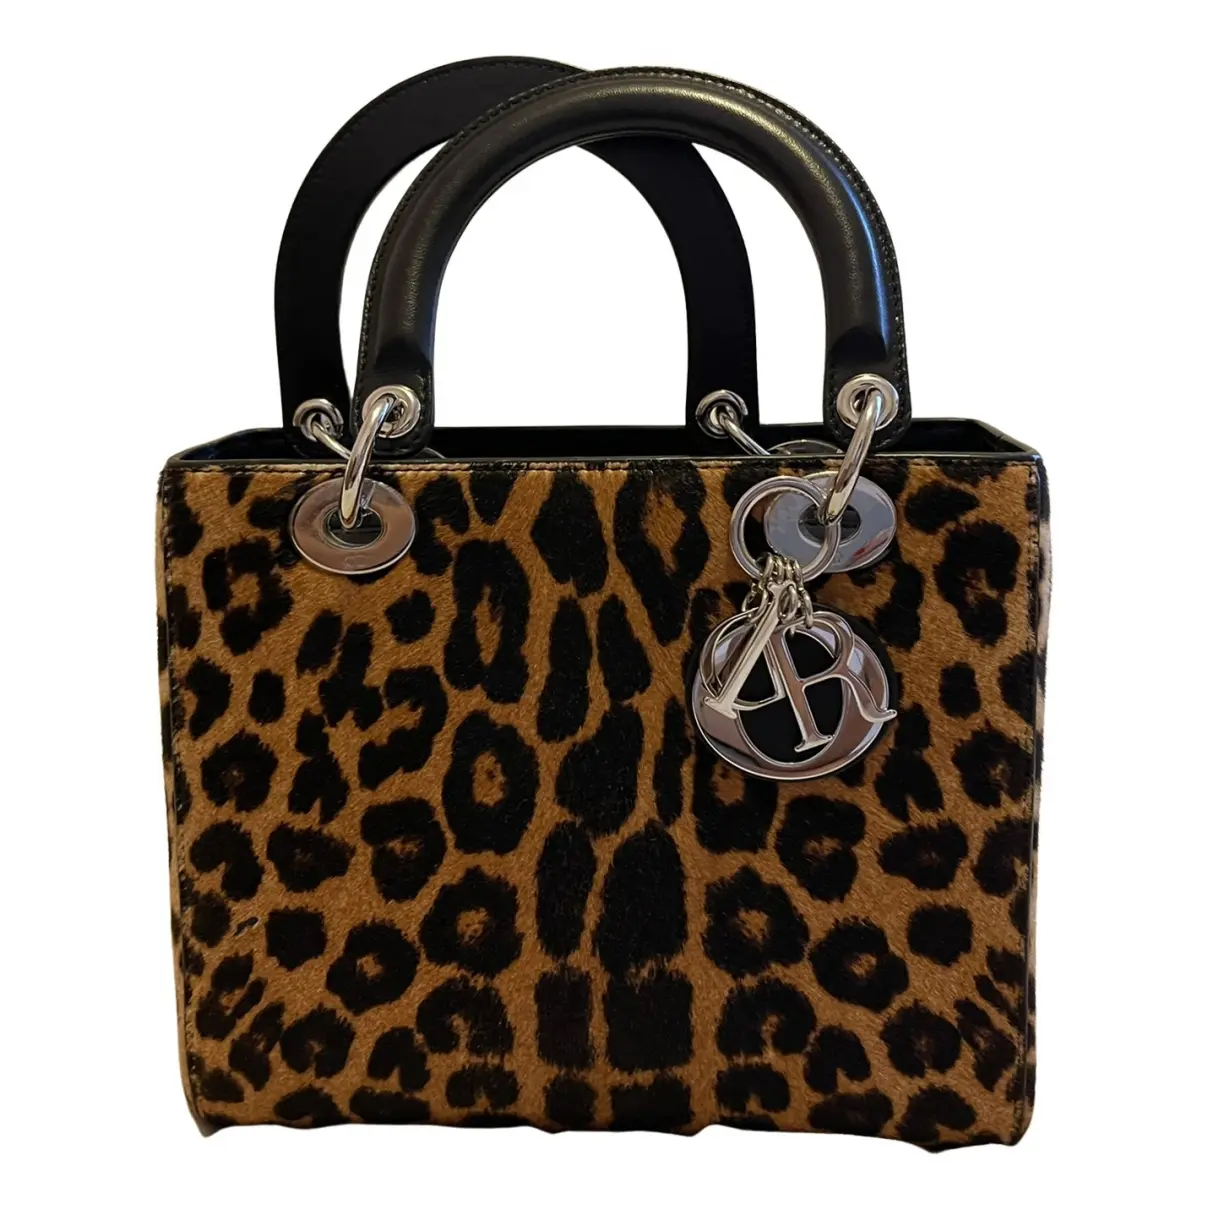 Lady Dior pony-style calfskin handbag Dior